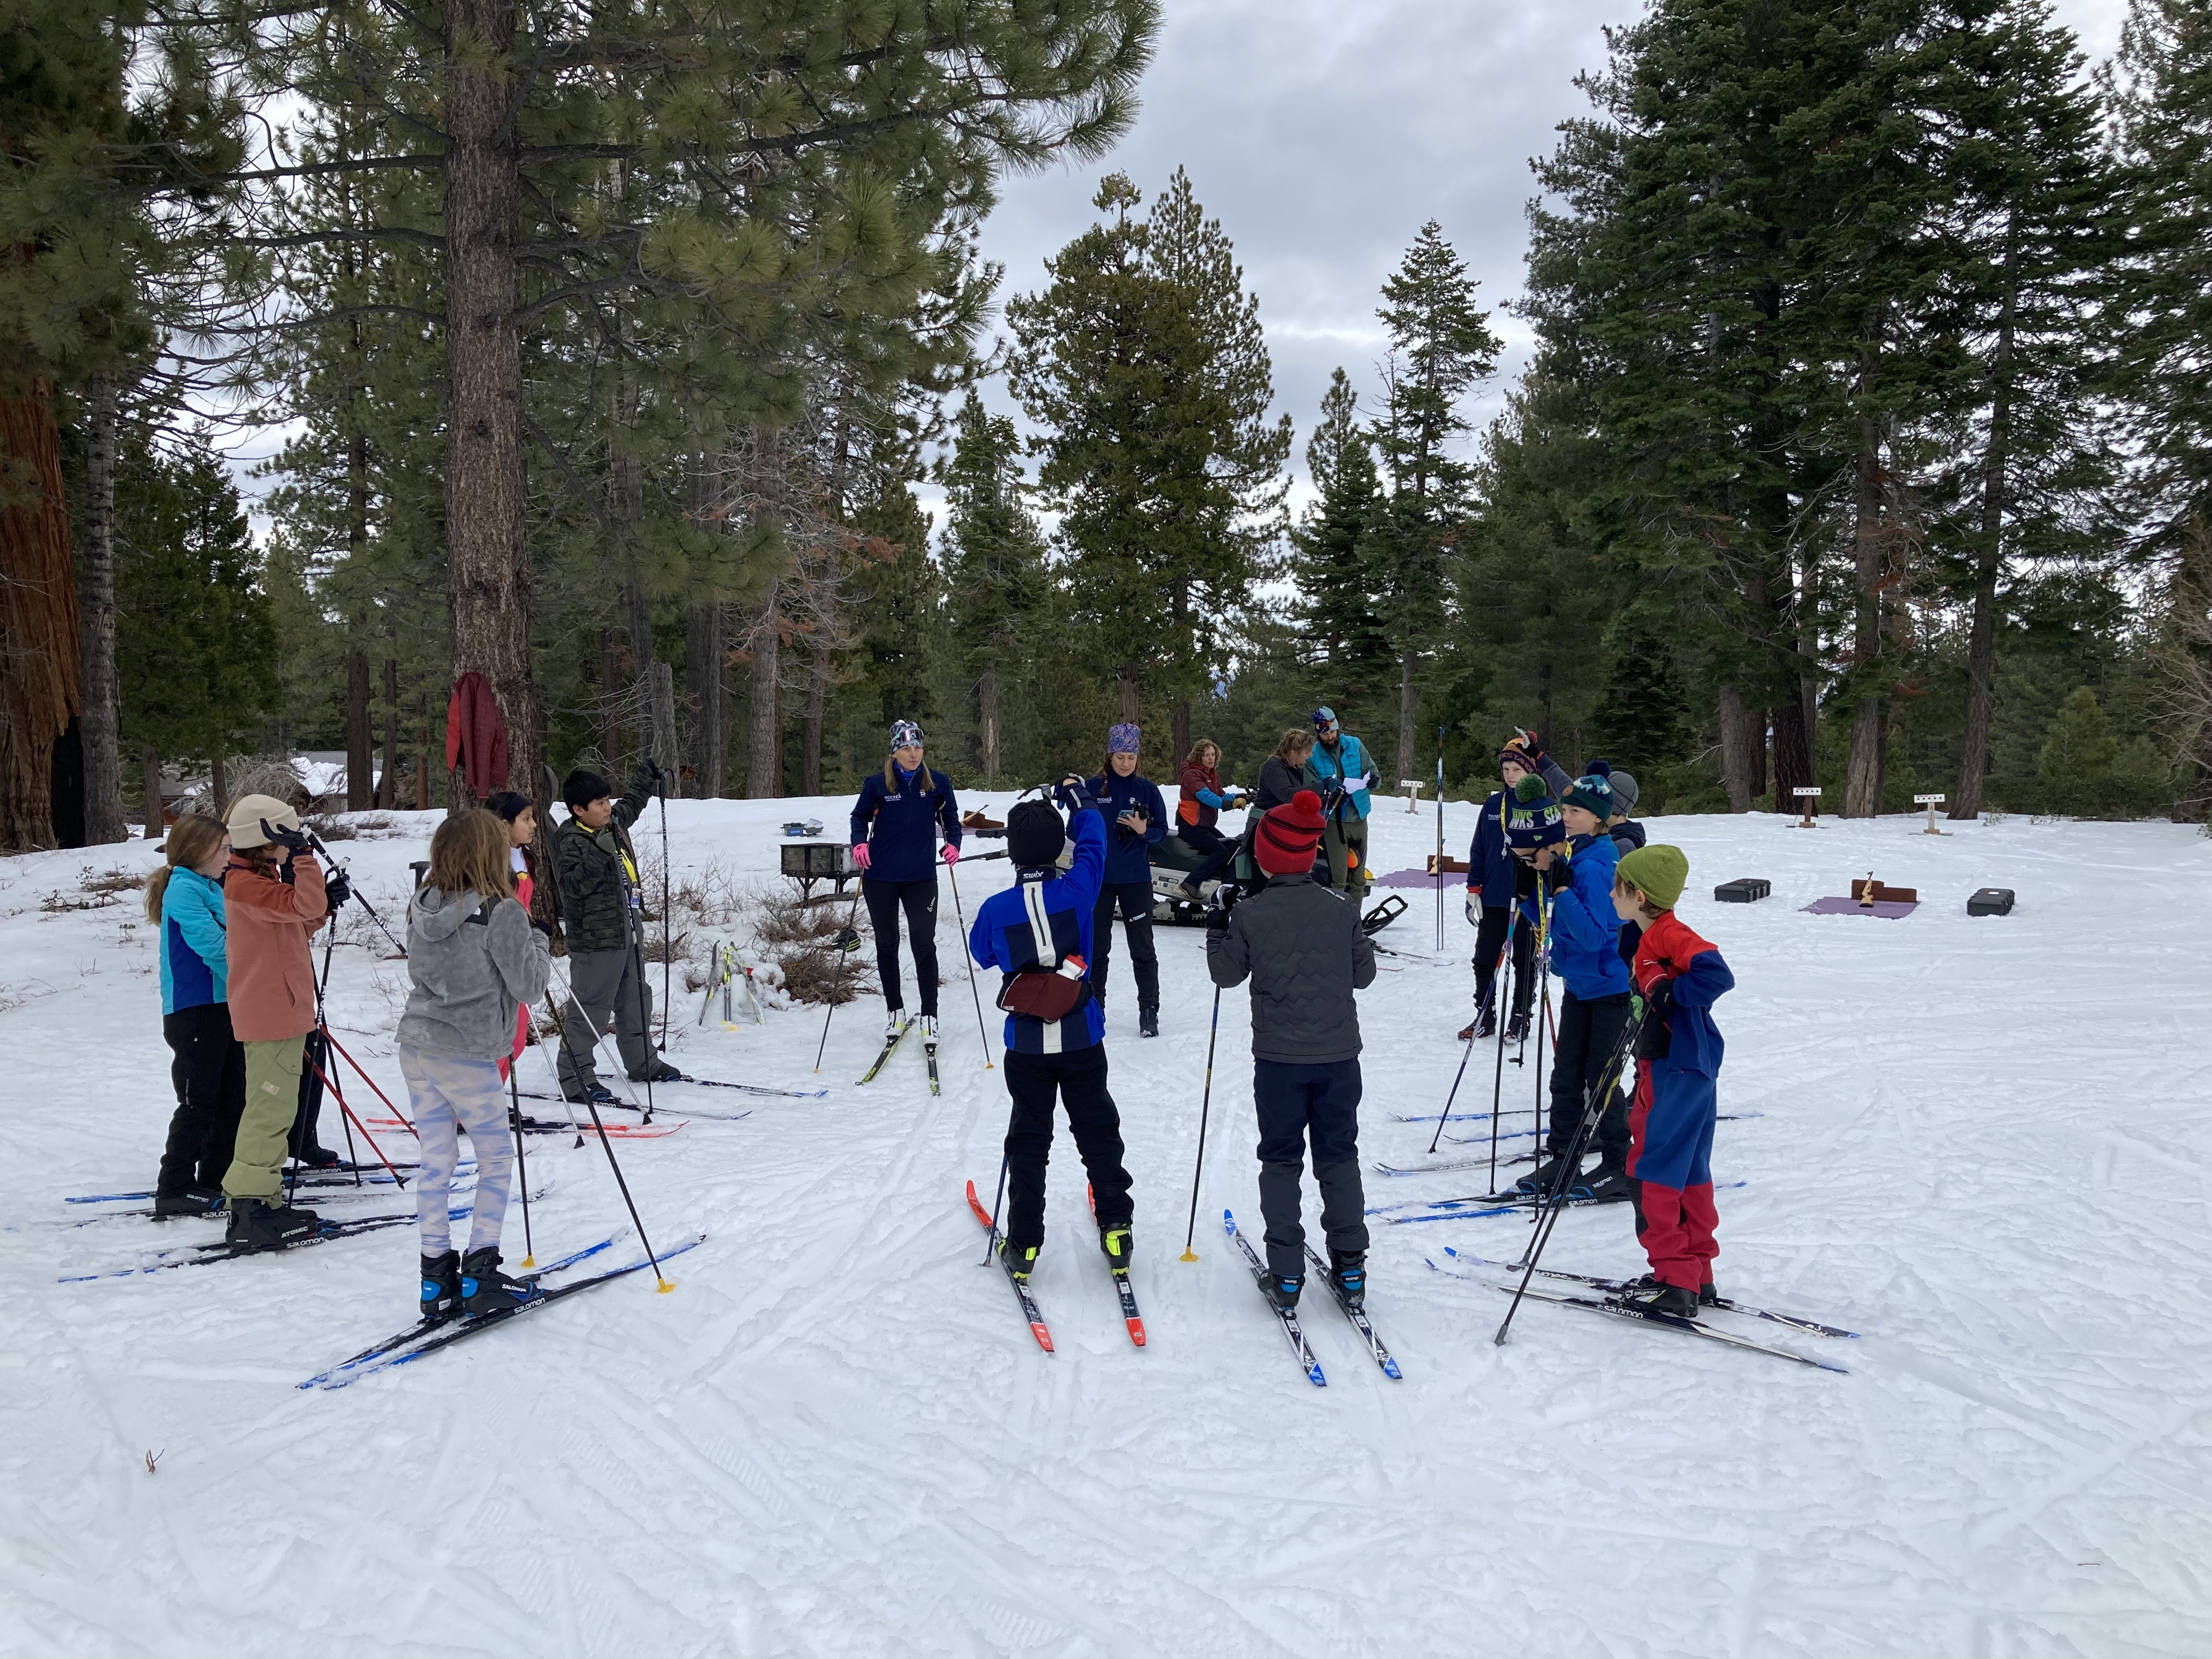 Strider Glider biathlon athletes circle up for instruction.